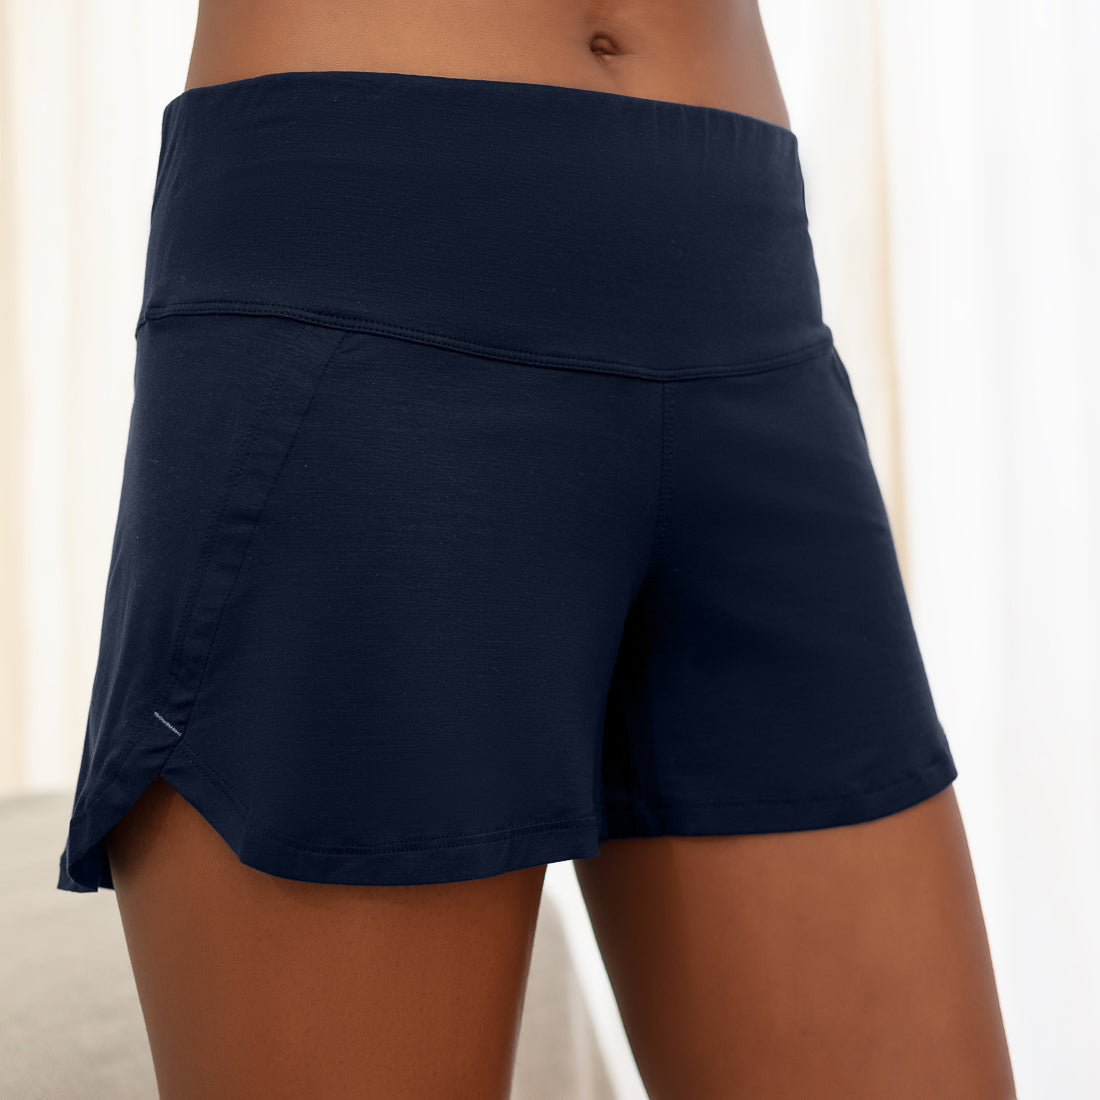 Women's cooling pajamas shorts || Navy blue